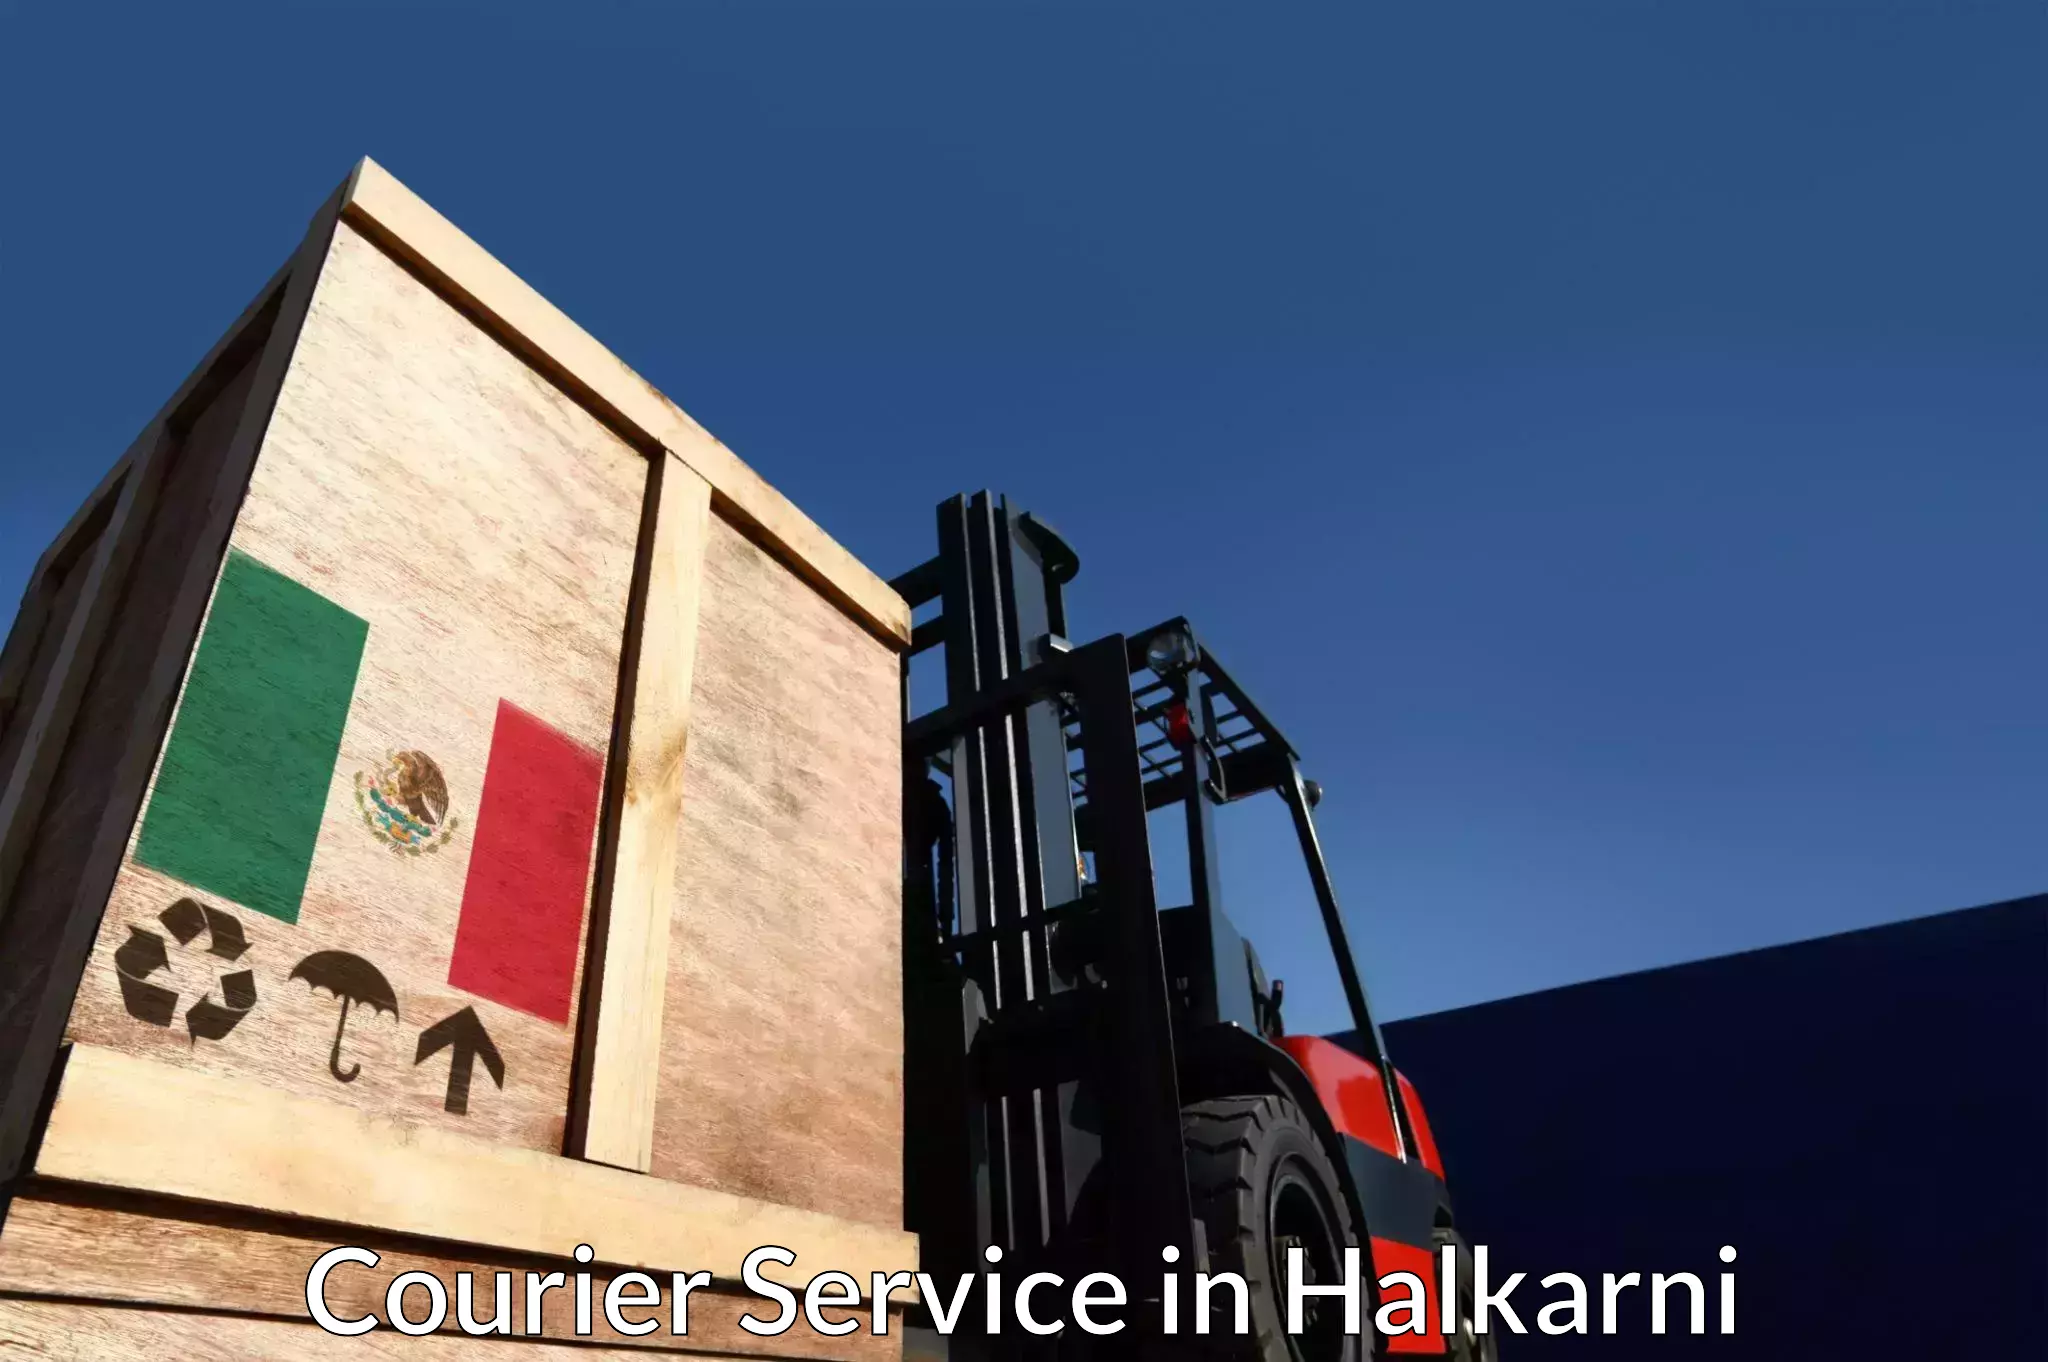 Comprehensive delivery network in Halkarni